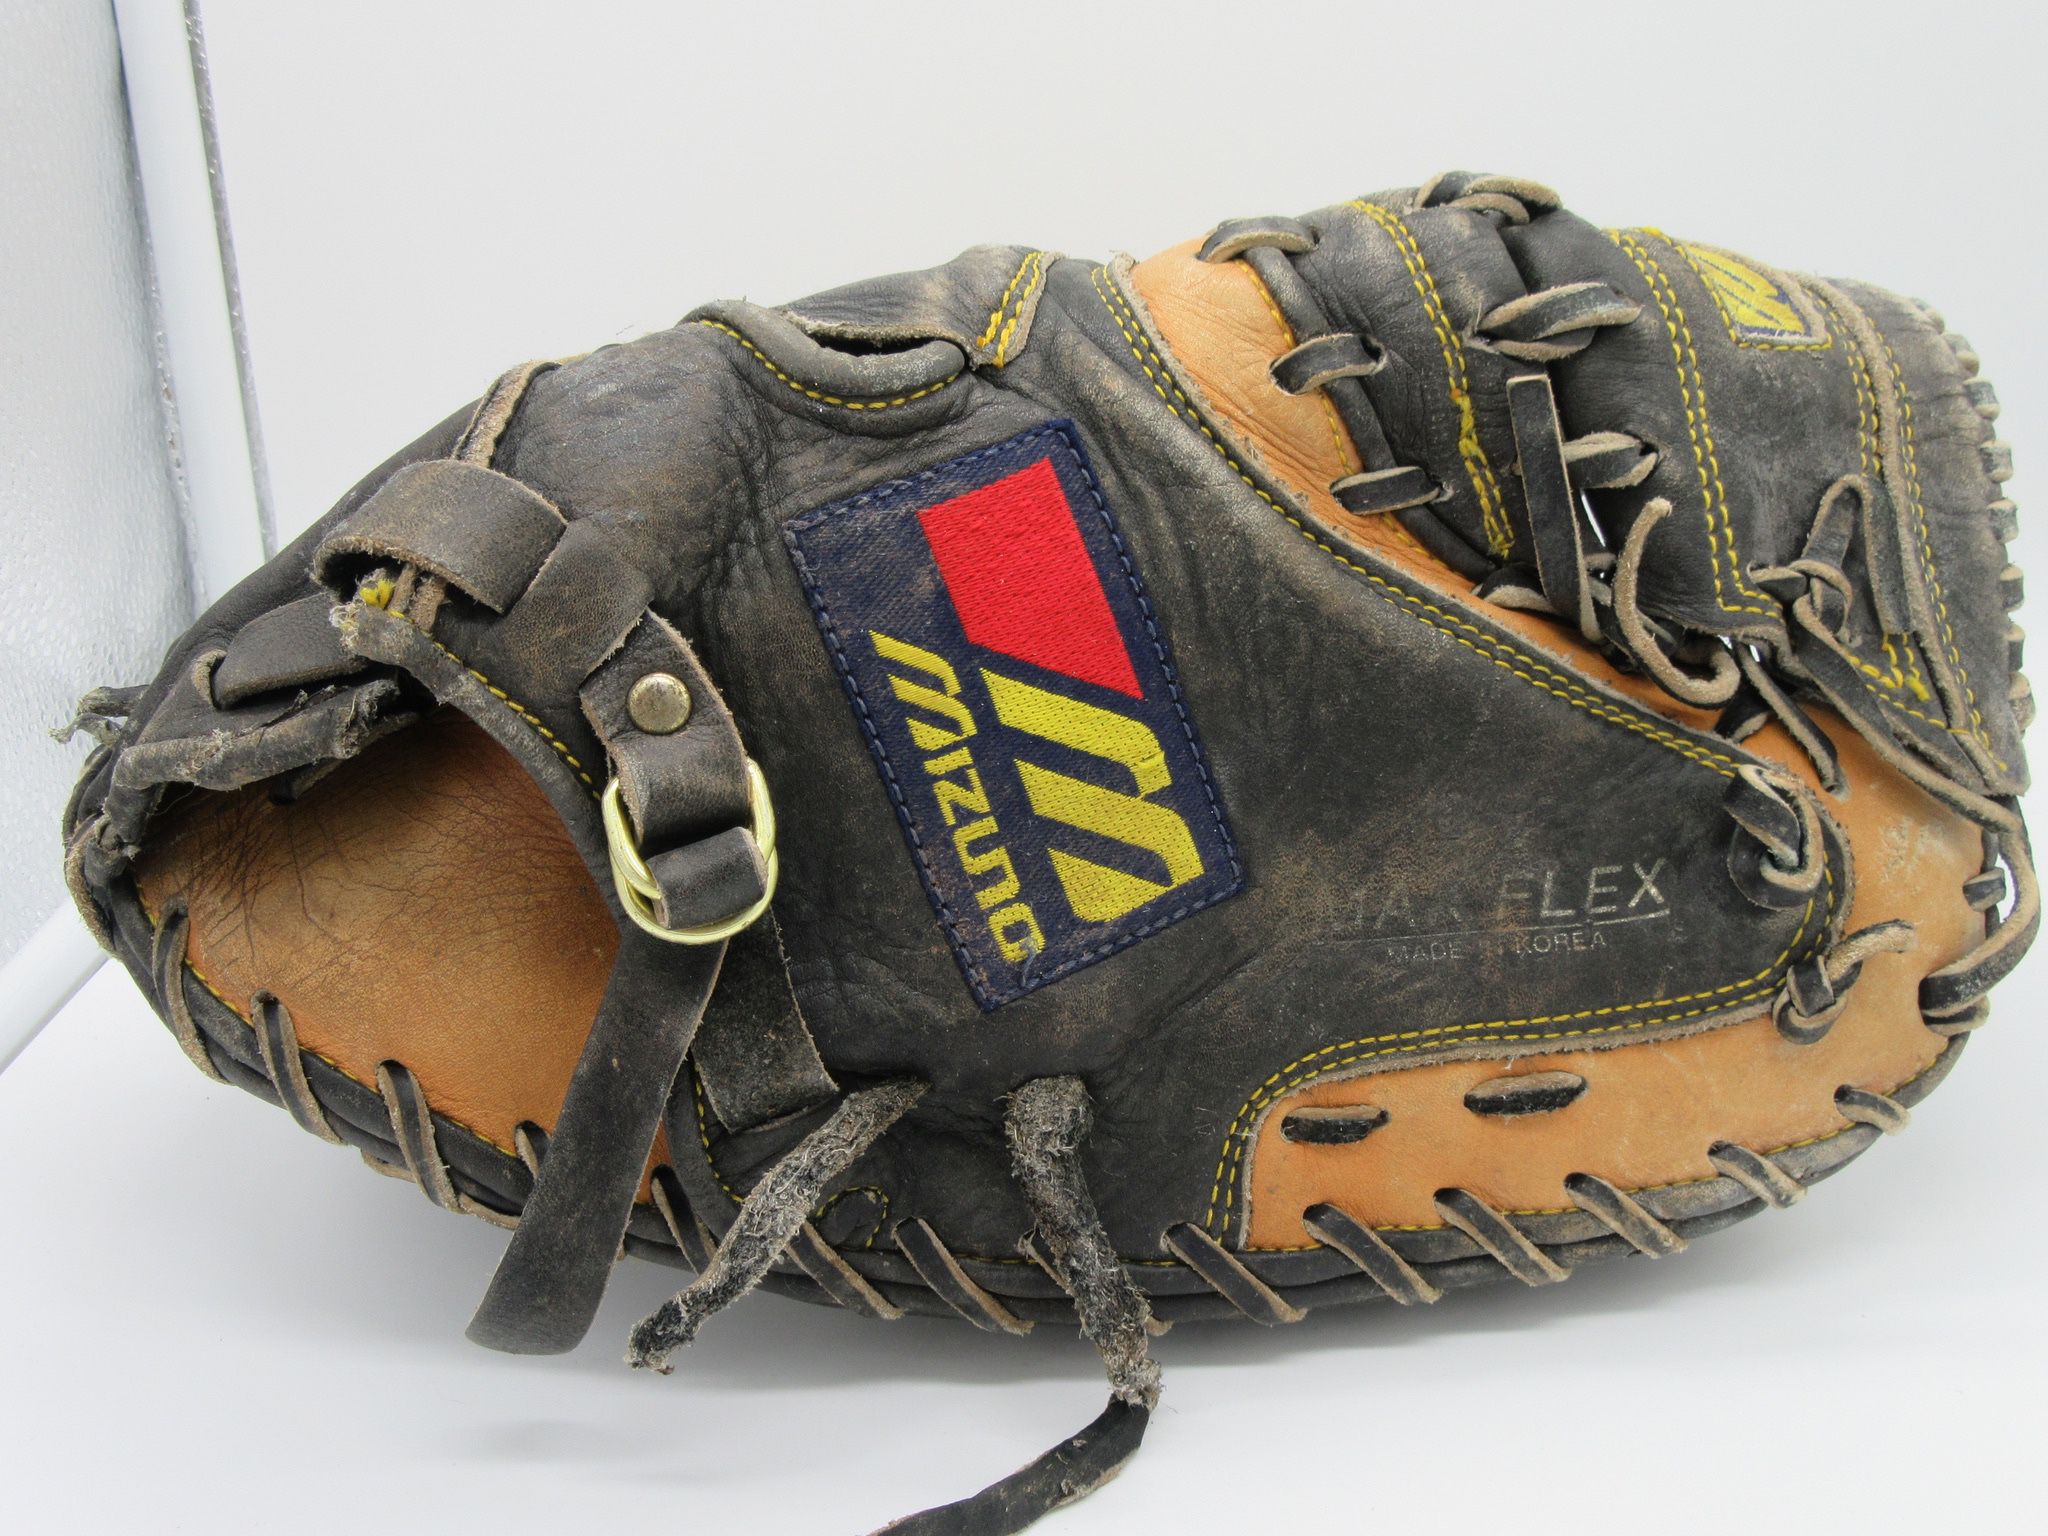 Mizuno MZS-C35 Professional Model Max Flex Catchers Mitt Baseball Glove